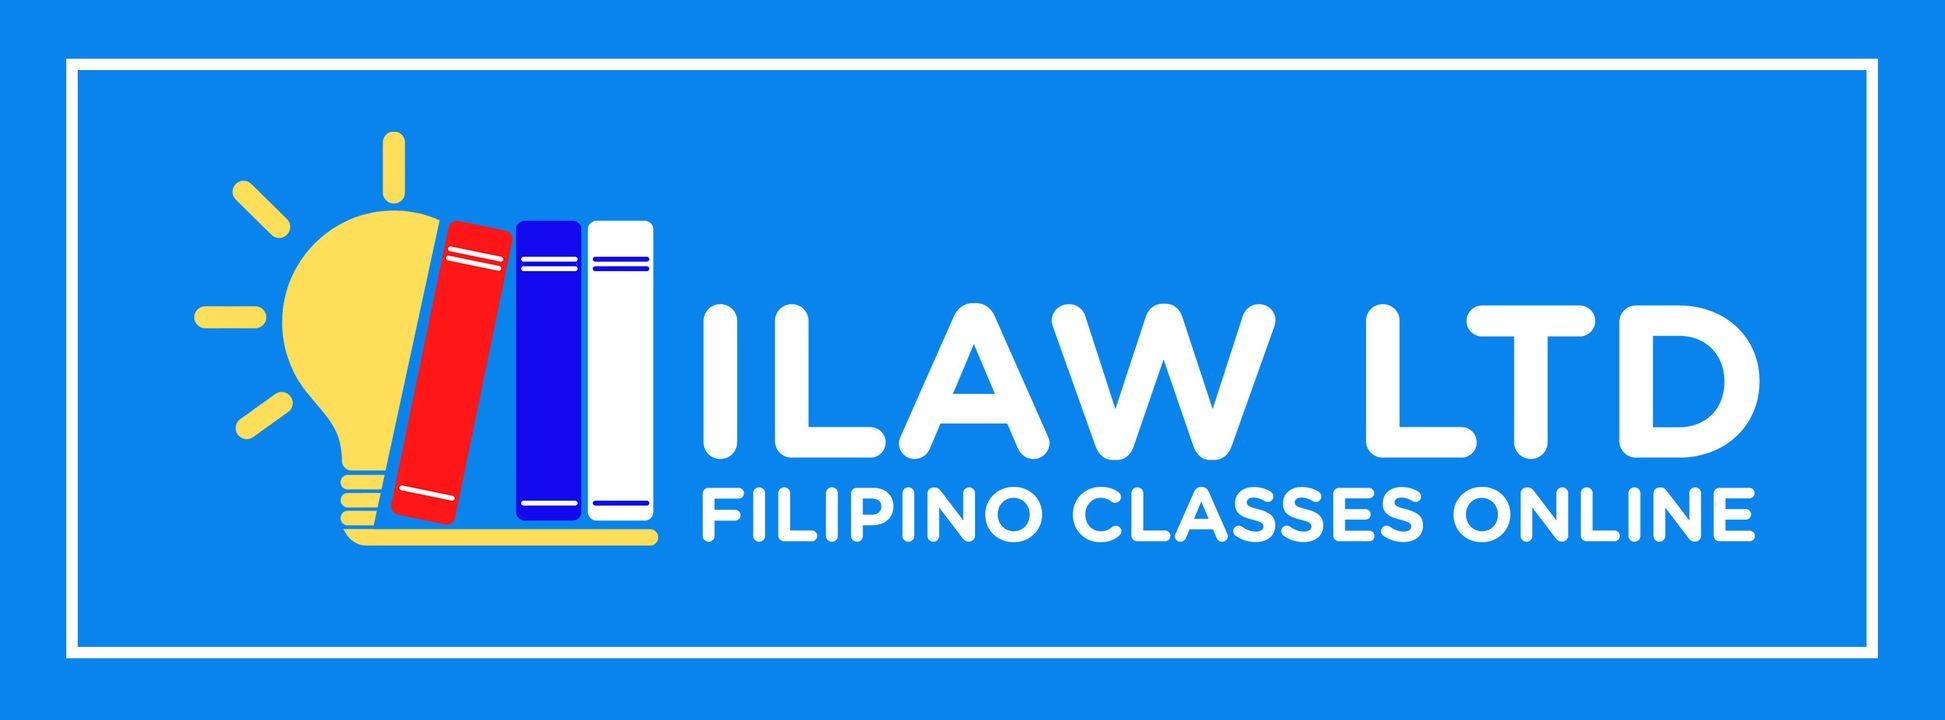 Filipino Classes Online